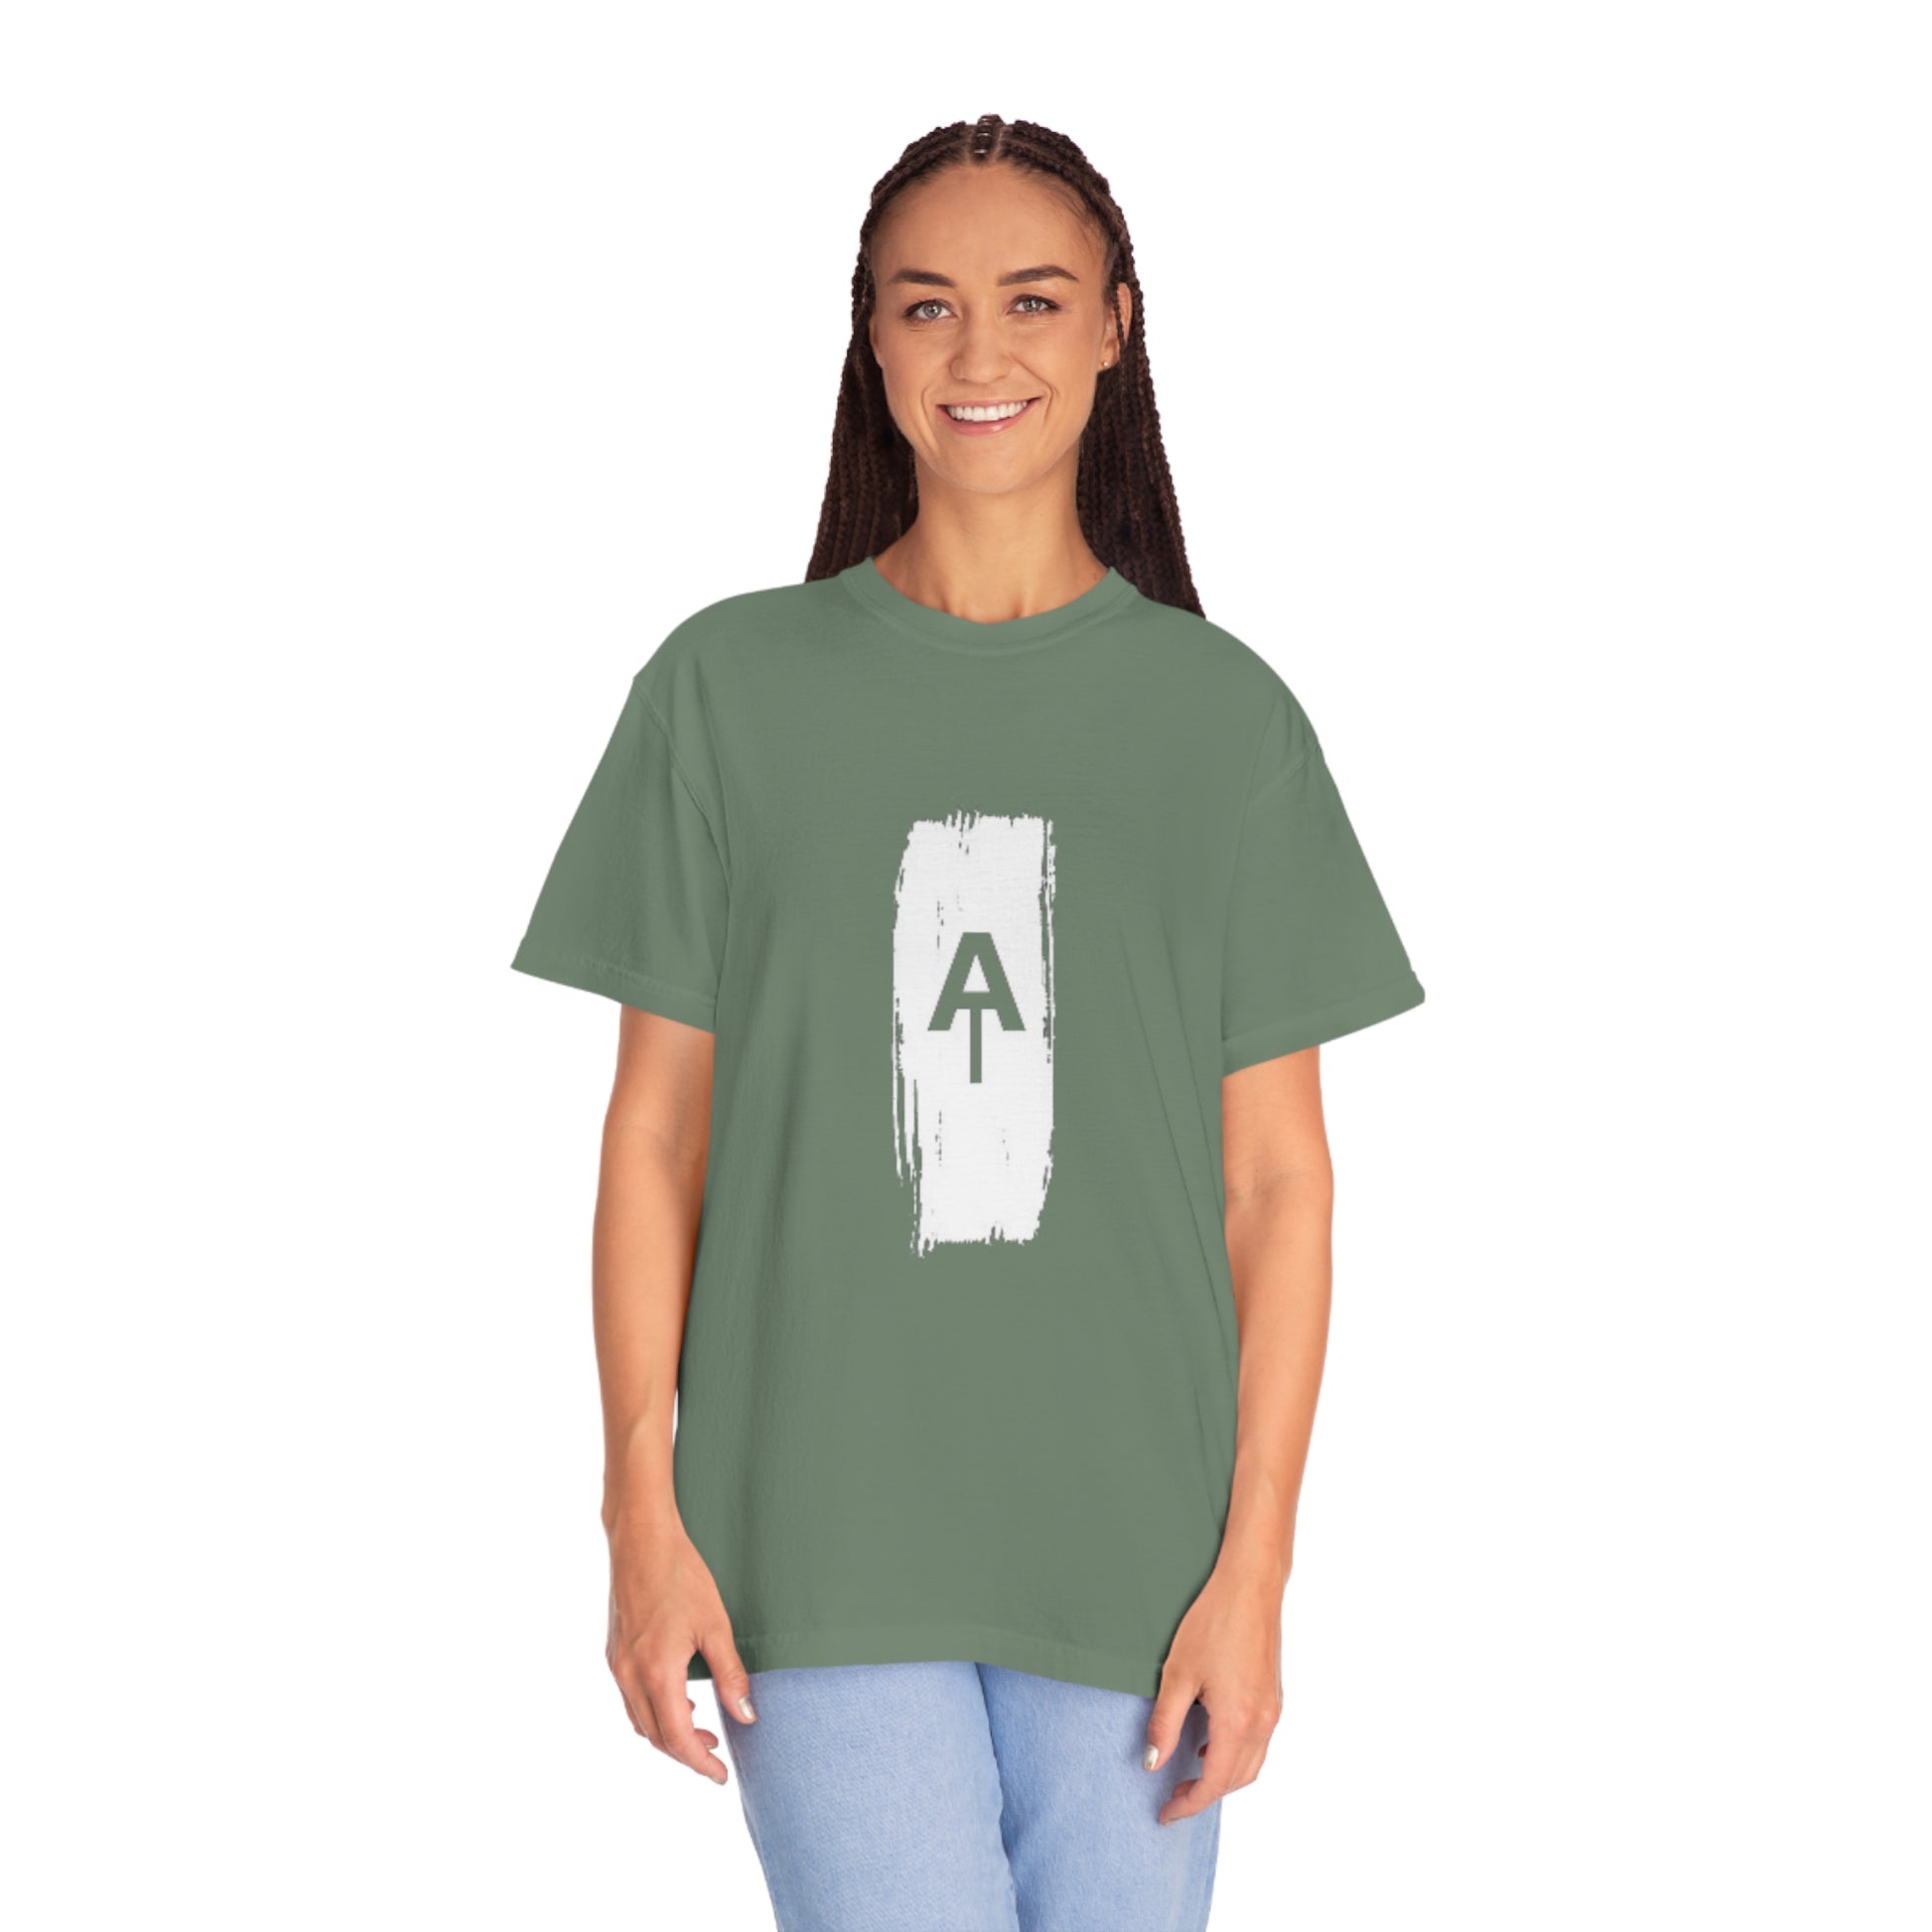 Appalachian Trail Comfort Colors t-shirt, North Carolina Appalachian shirt, Blaze AT Shirt, Appalachian Trail Blaze shirt, Appalachian Trail apparel, Appalachian Trail shirt, Shirt for Appalachian Trail, Shirt for hiking, Shirt for hikers, Gift for hikers